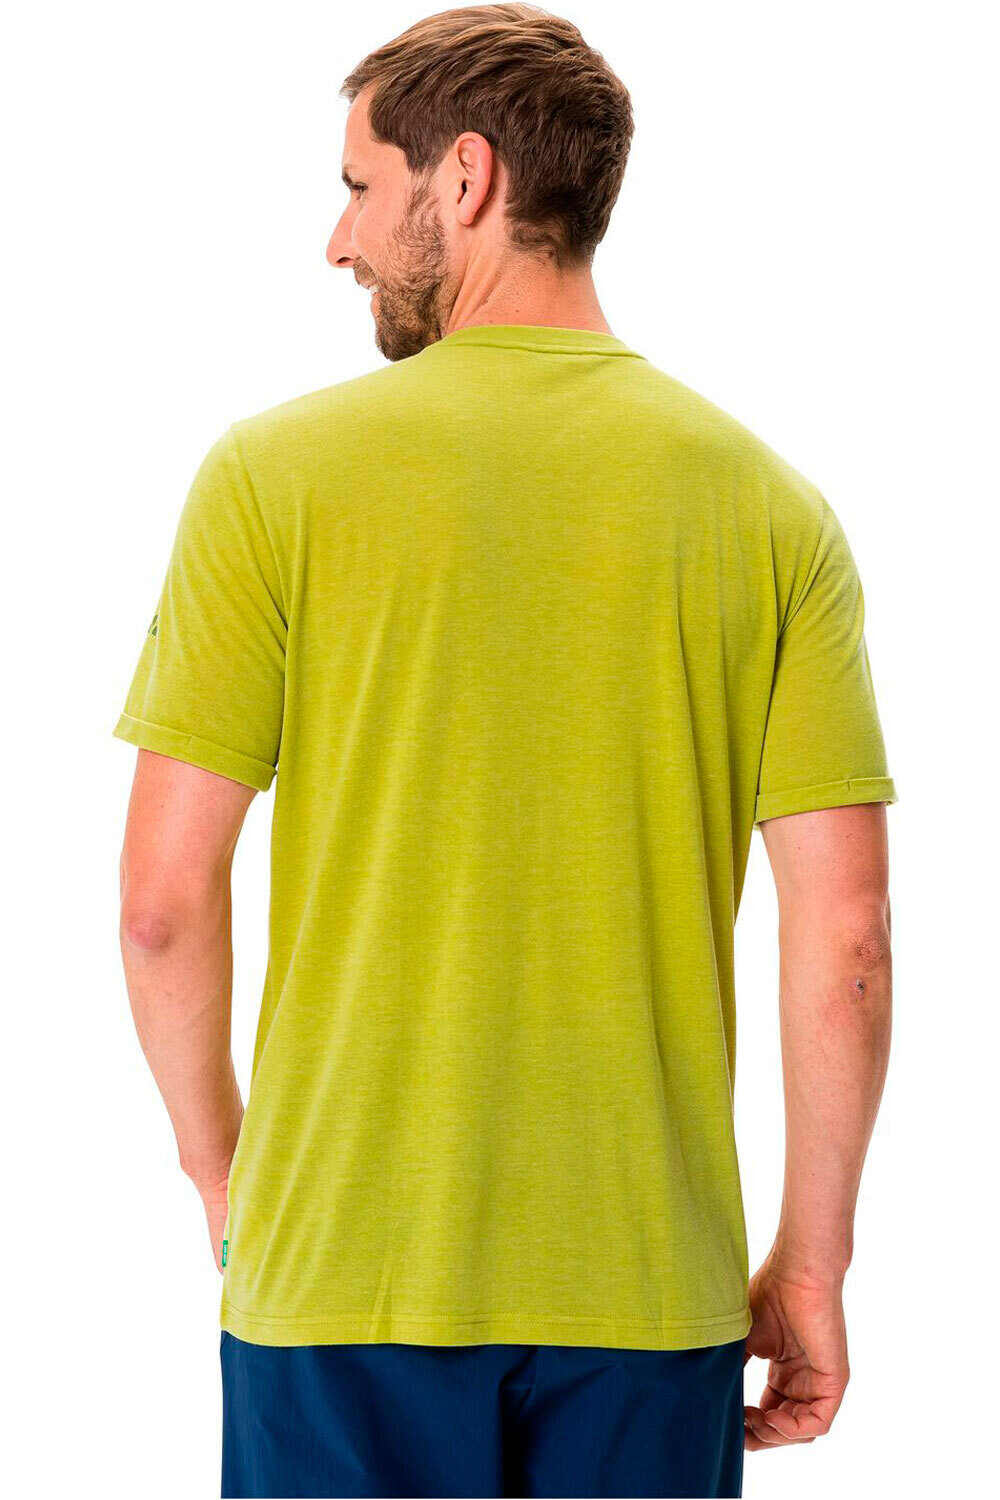 Vaude camiseta montaña manga corta hombre Men s Neyland T-Shirt vista trasera